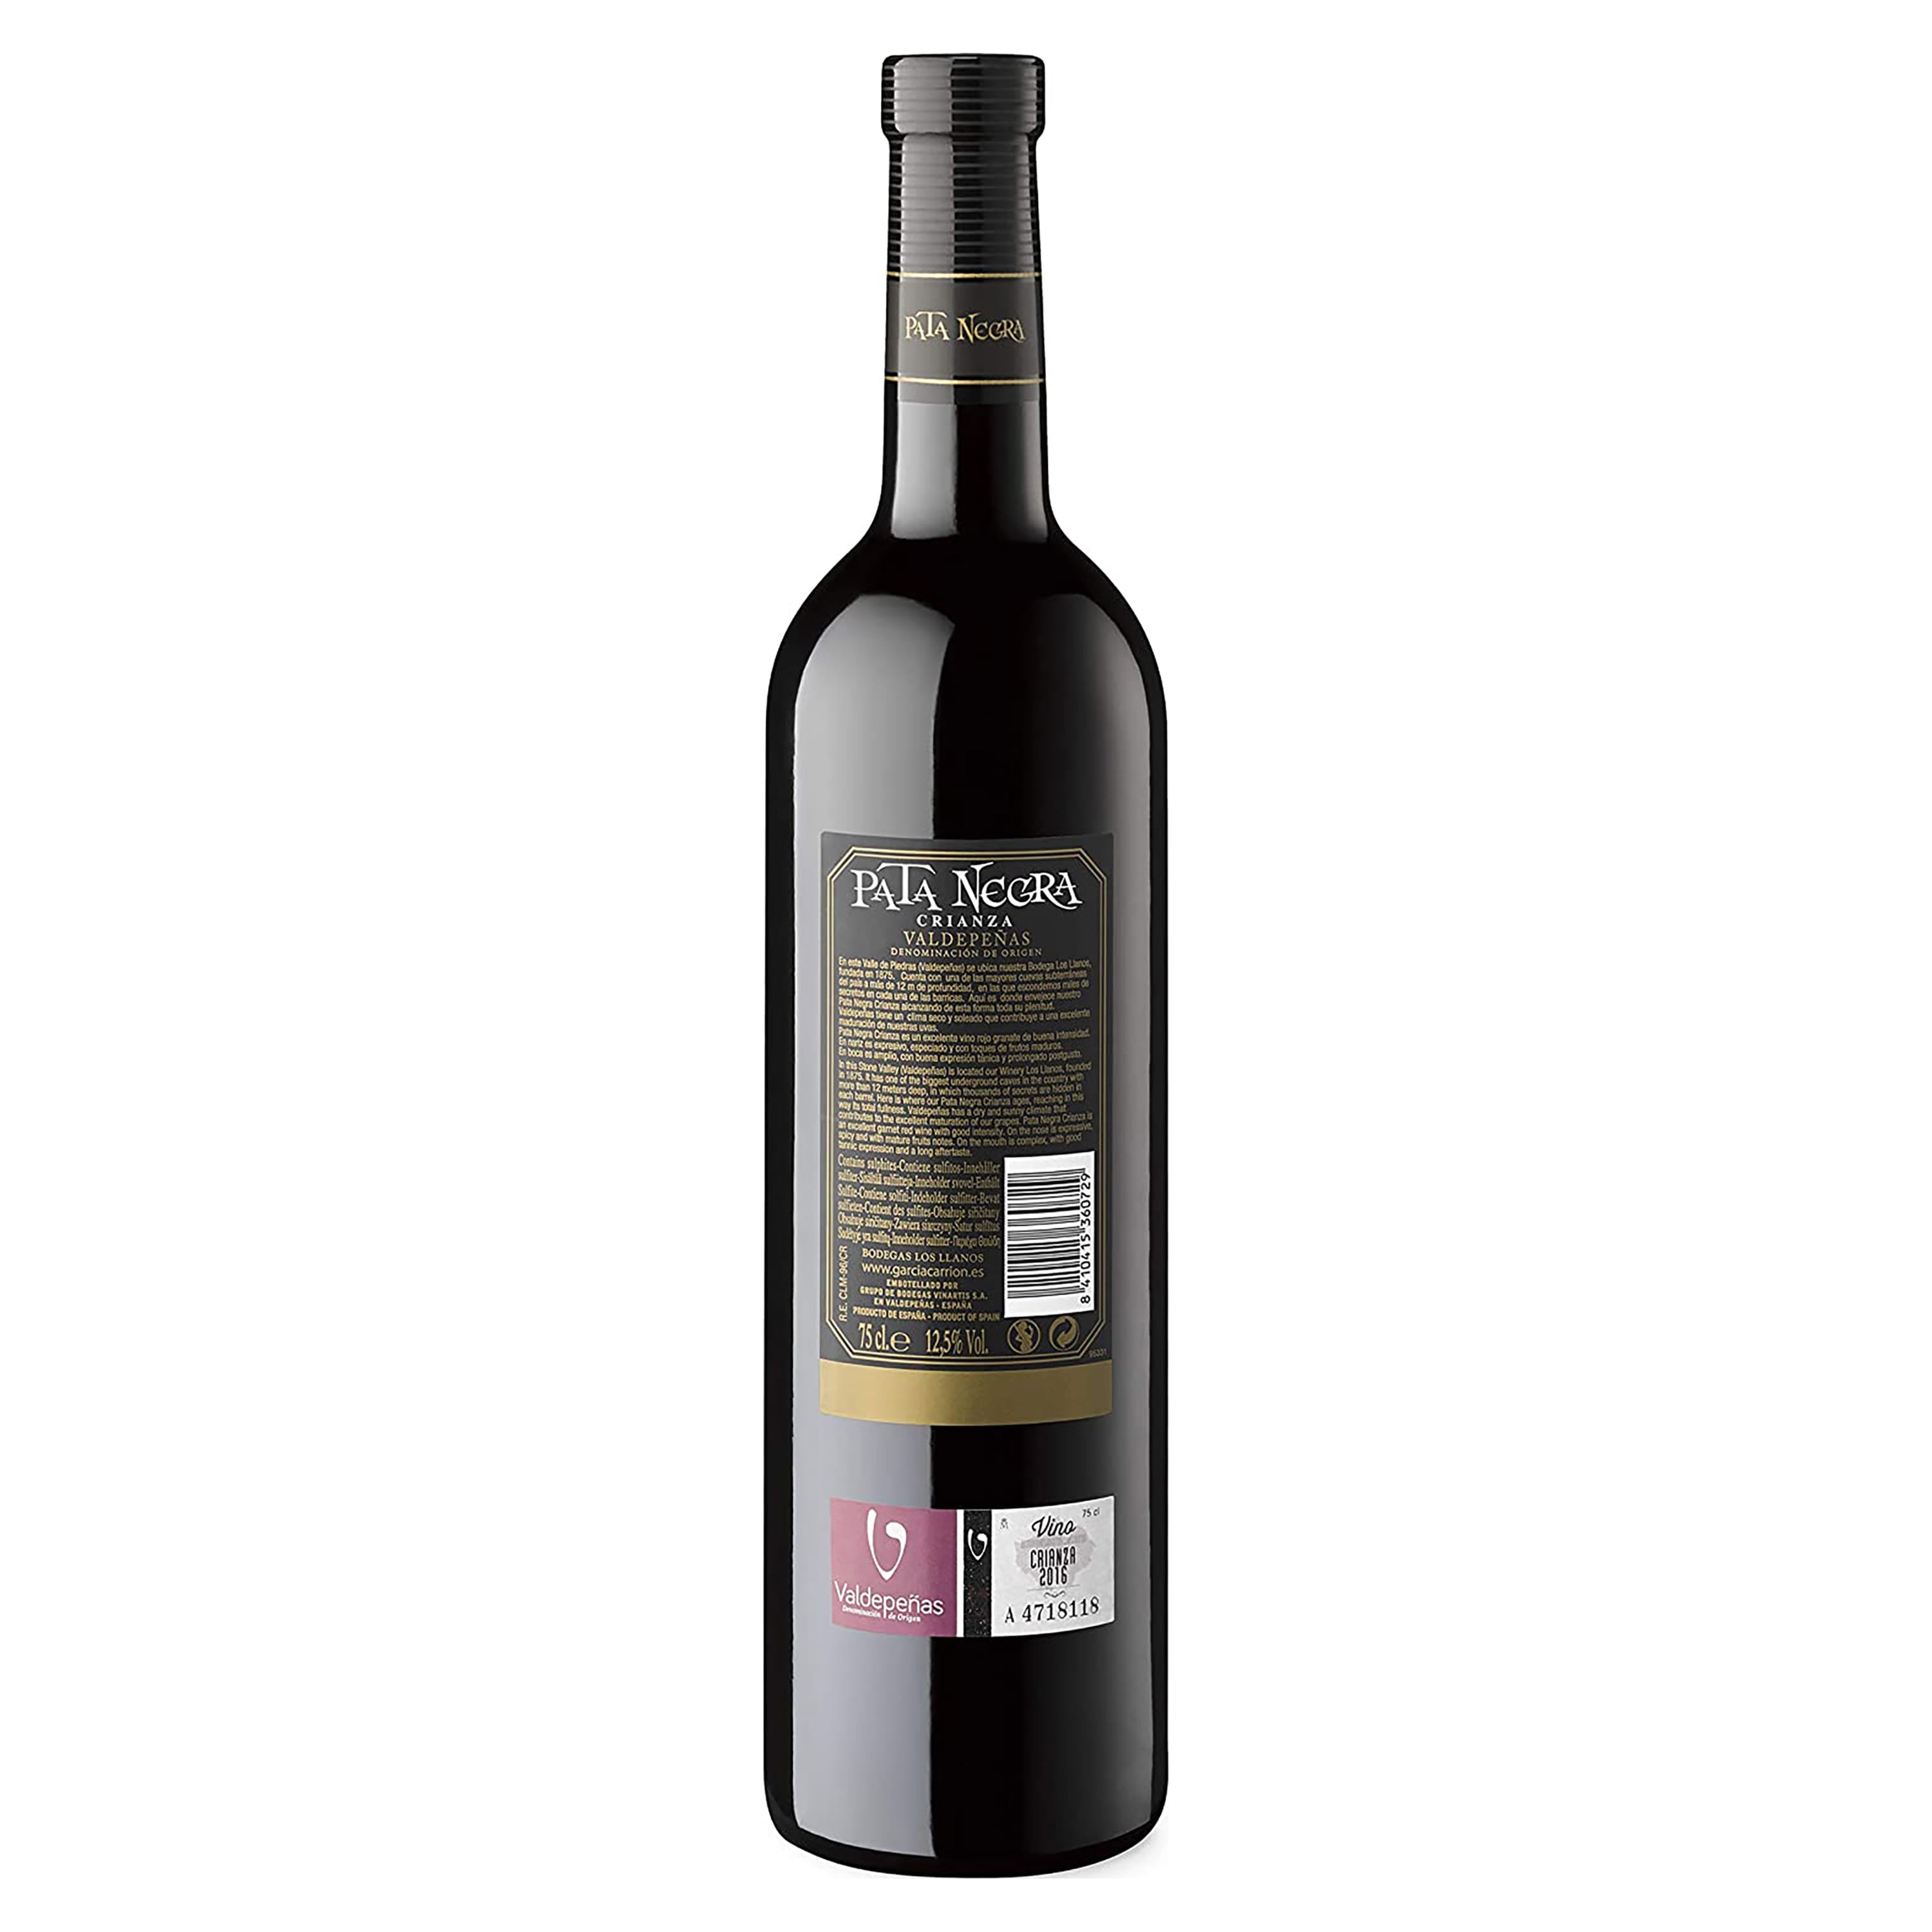 Comprar Vino Pata Negra Tinto Rioja Crianza 2010 - 750ml